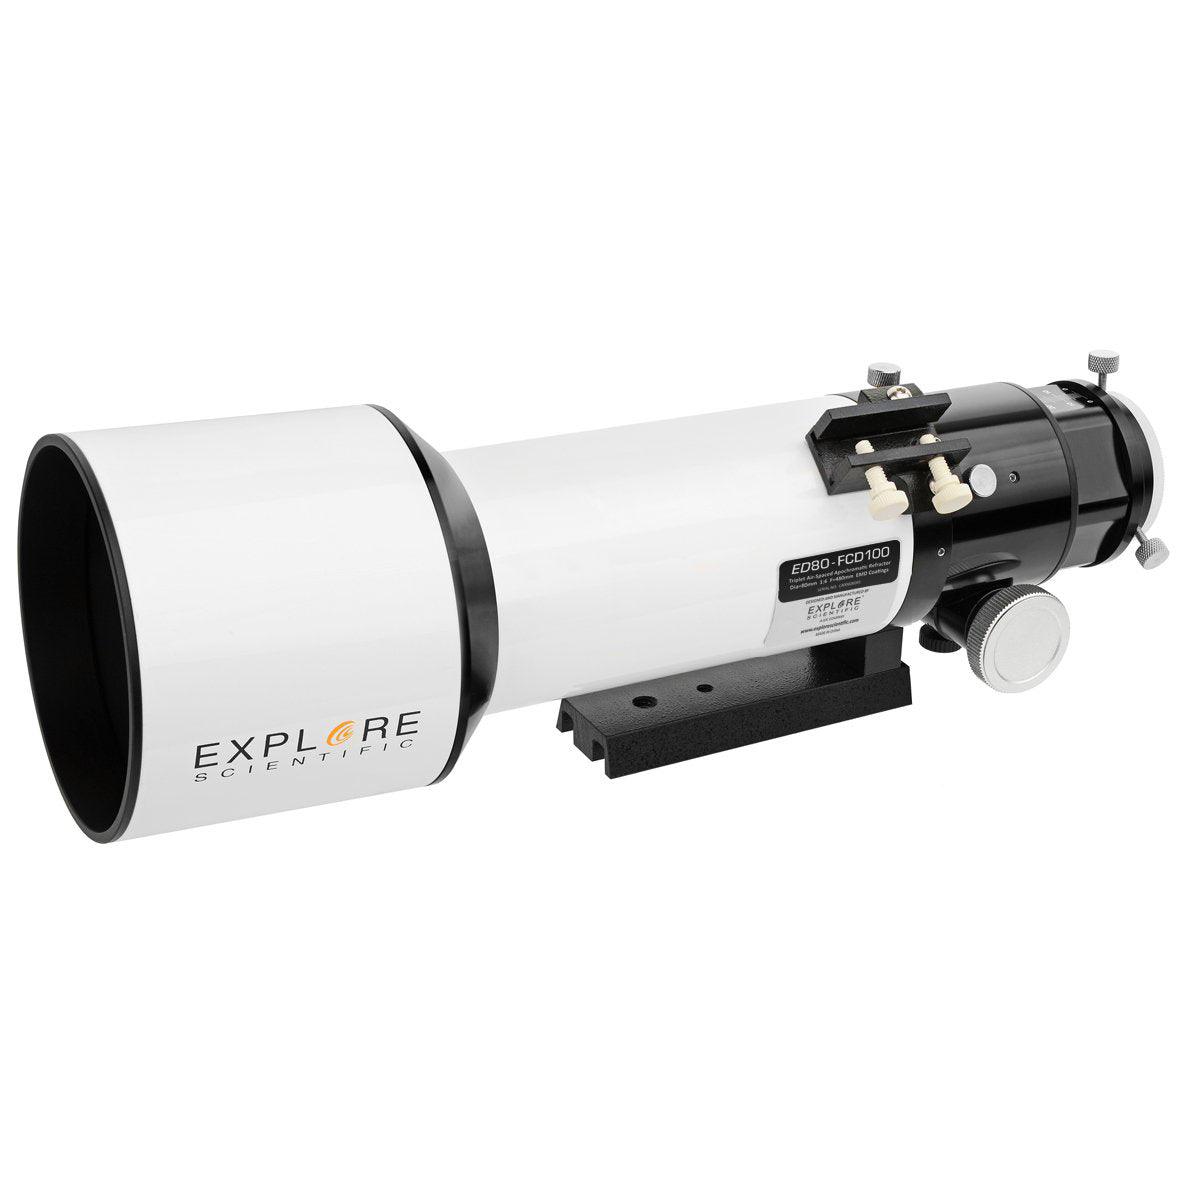 Explore Scientific ED80-FCD100 Series Air-Spaced Triplet Refractor Telescope and Field Flattener f/5 to f/7 - Silverlight Optics